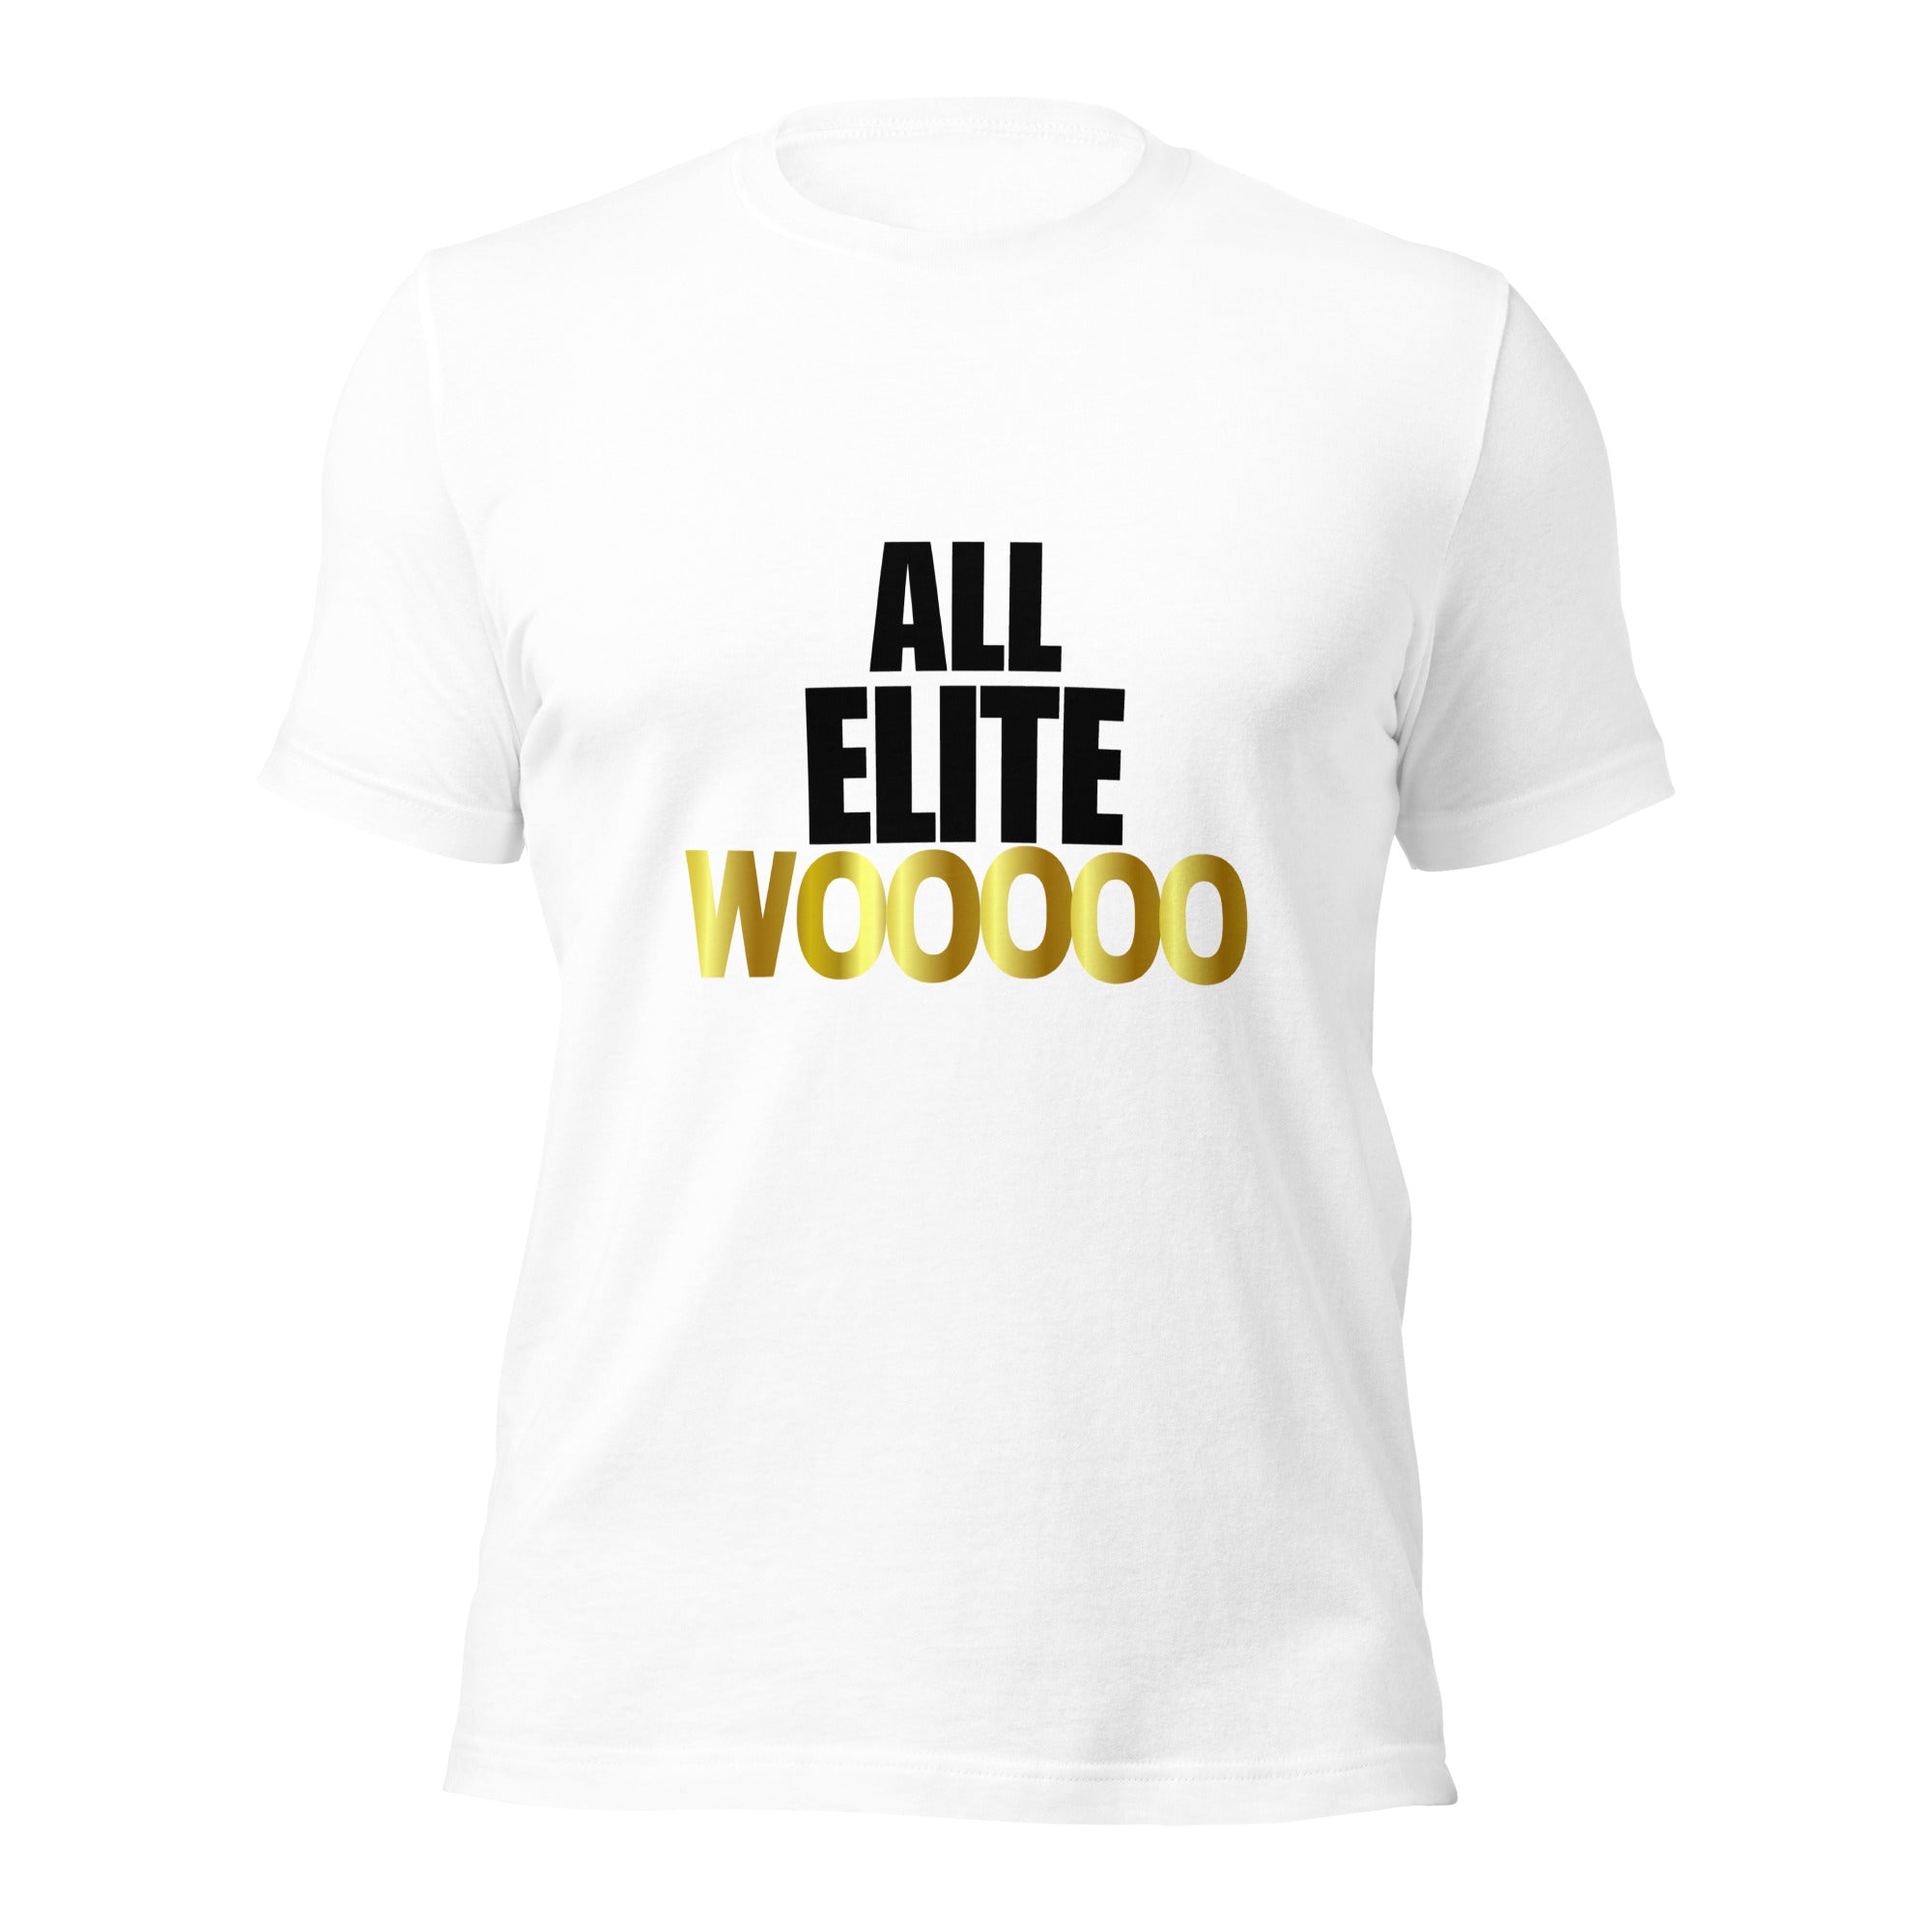 All Elite Wooooo! t-shirt